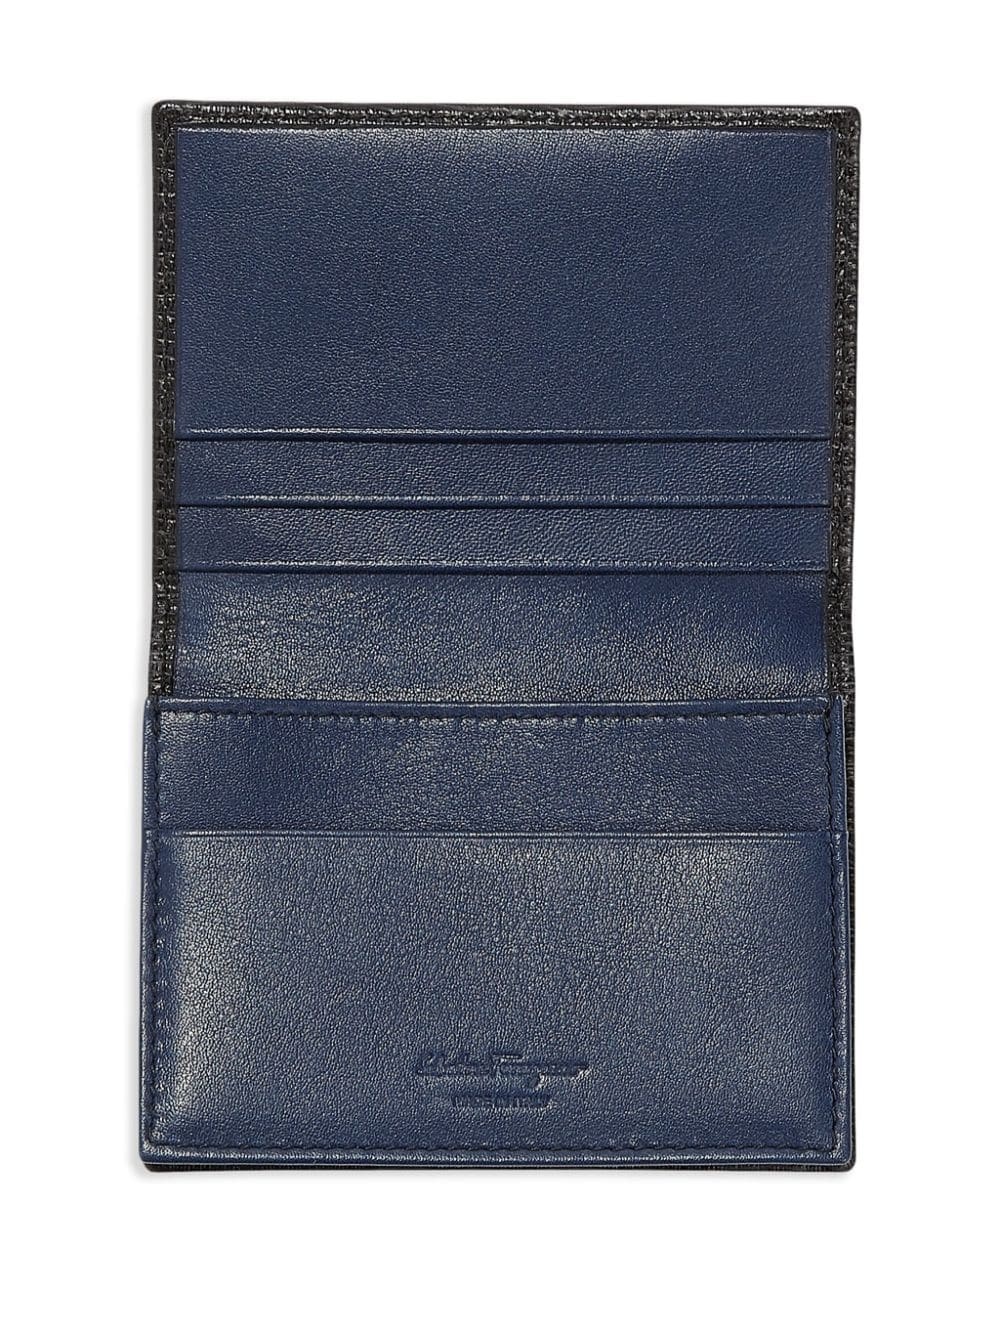 Gancini leather card holder - 3